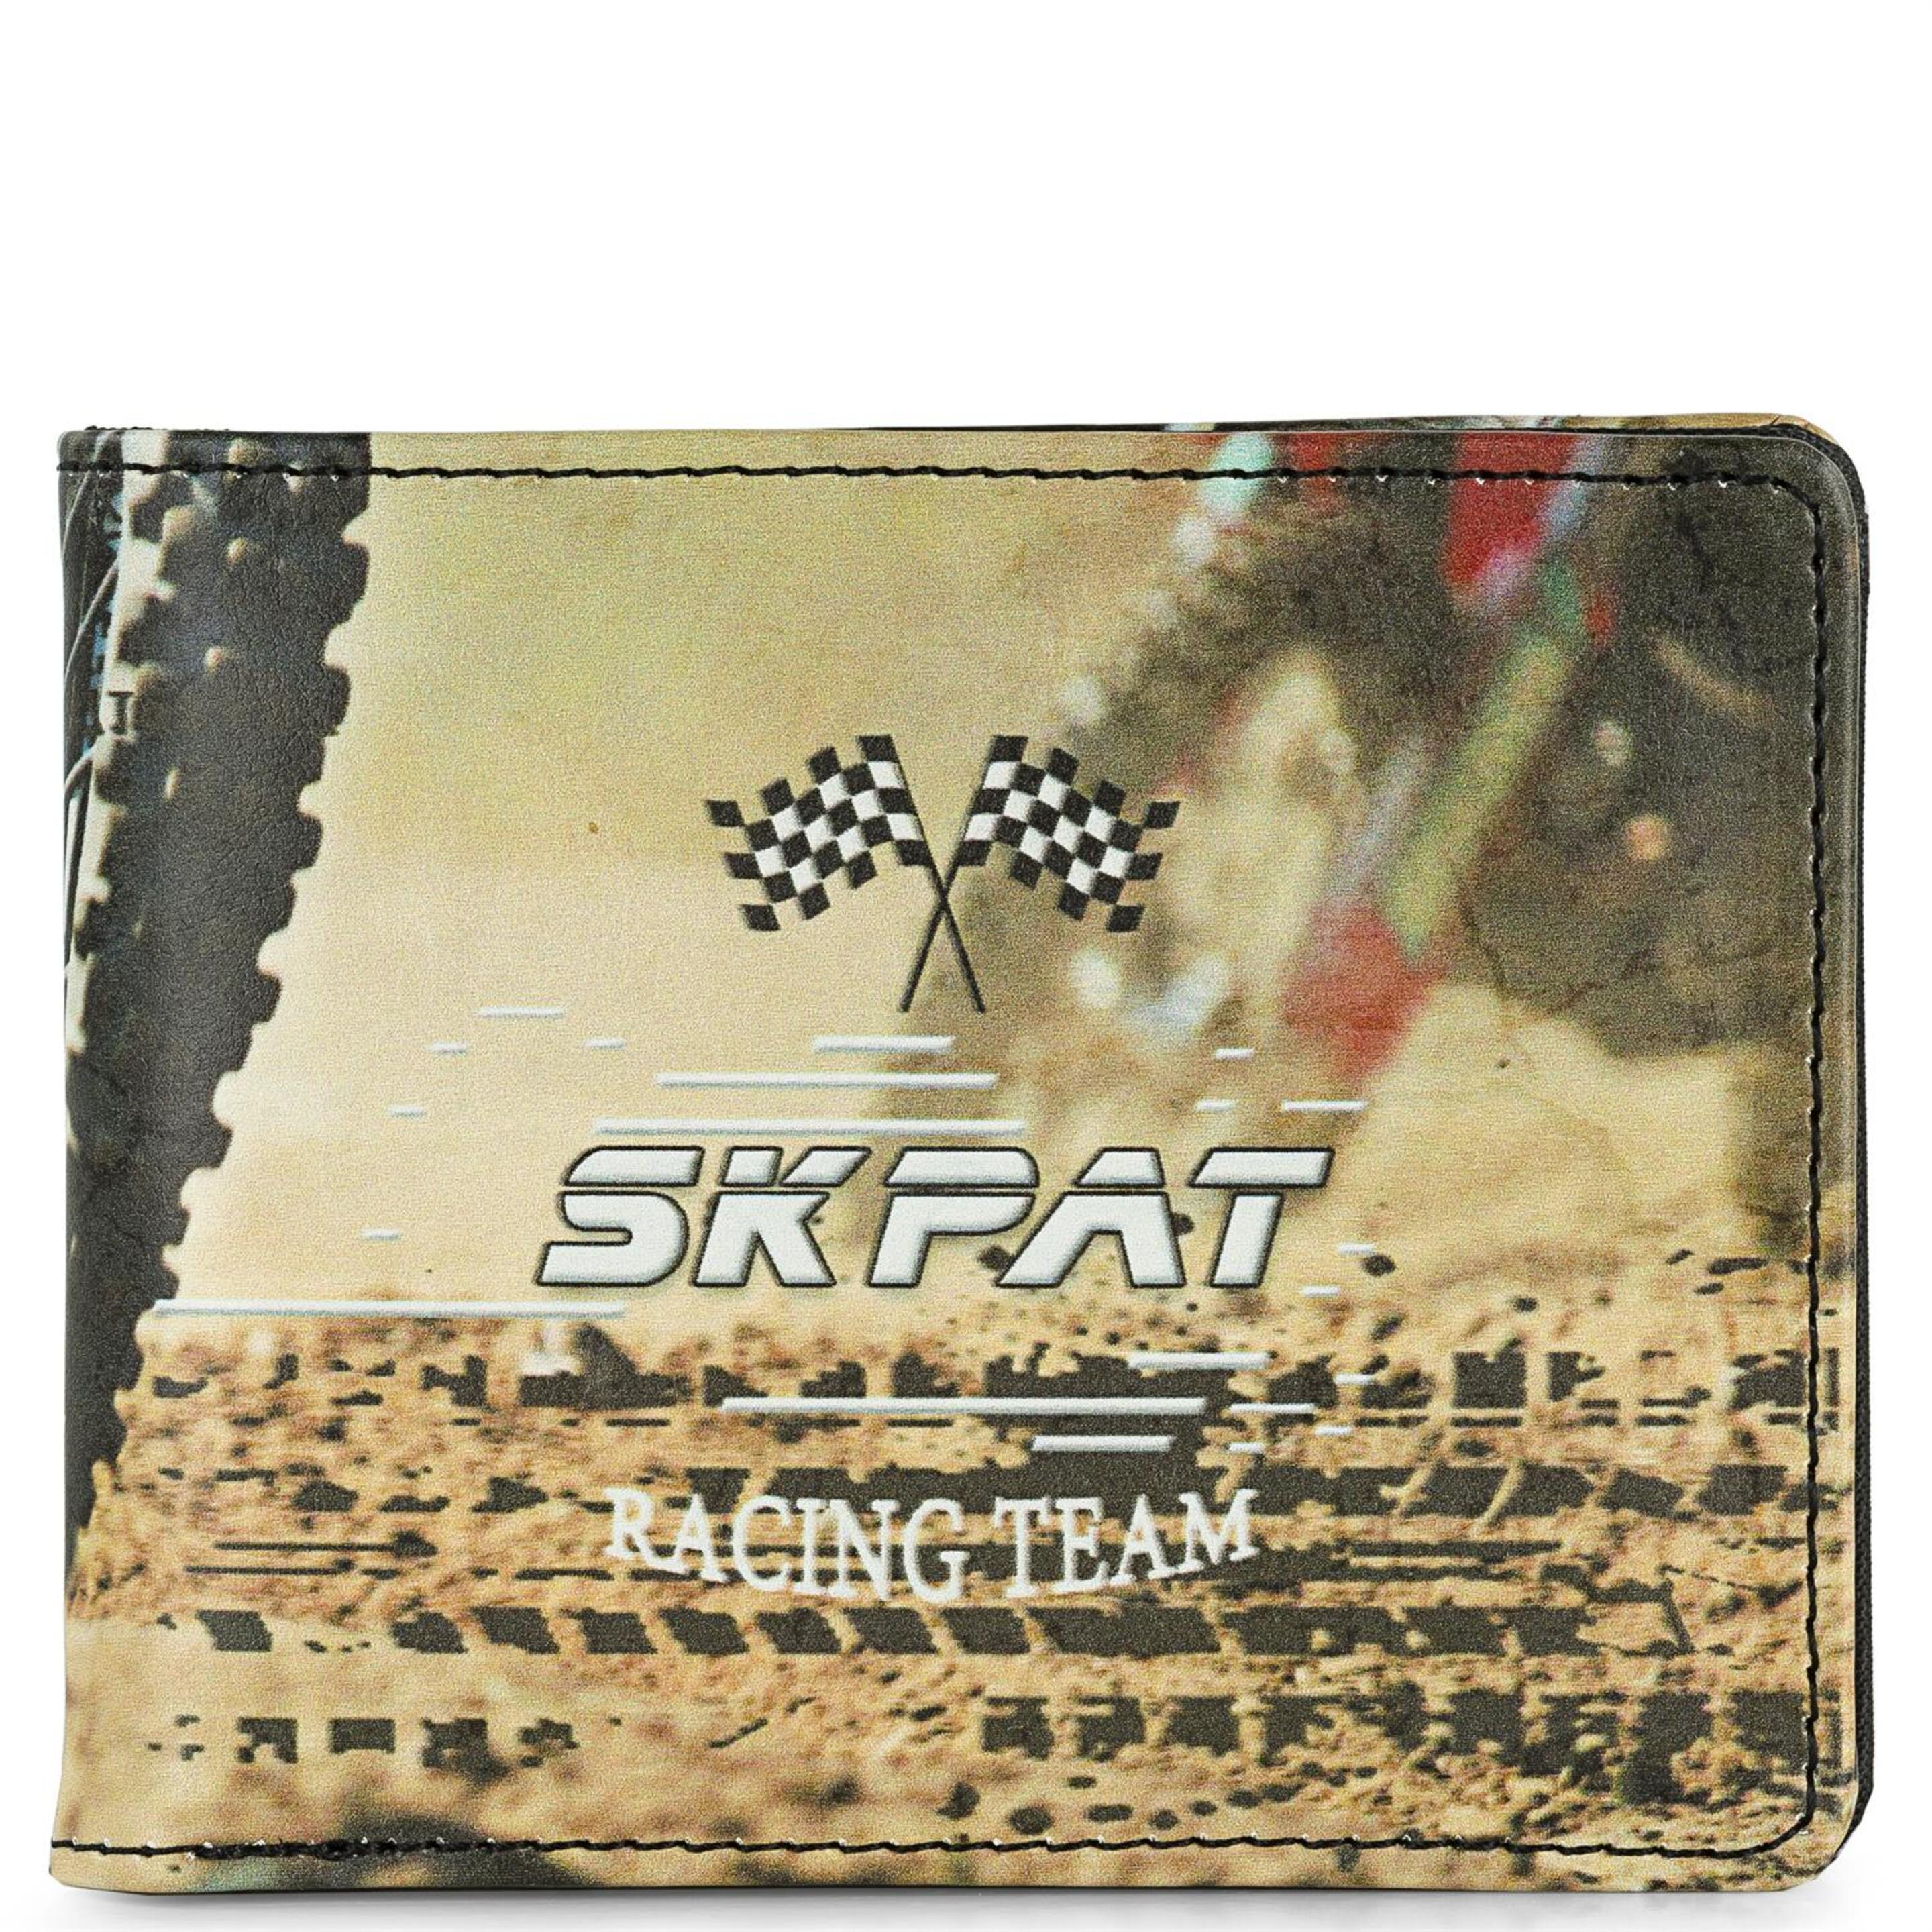 Carteira Skpat Racing Team - Multicor | Sport Zone MKP